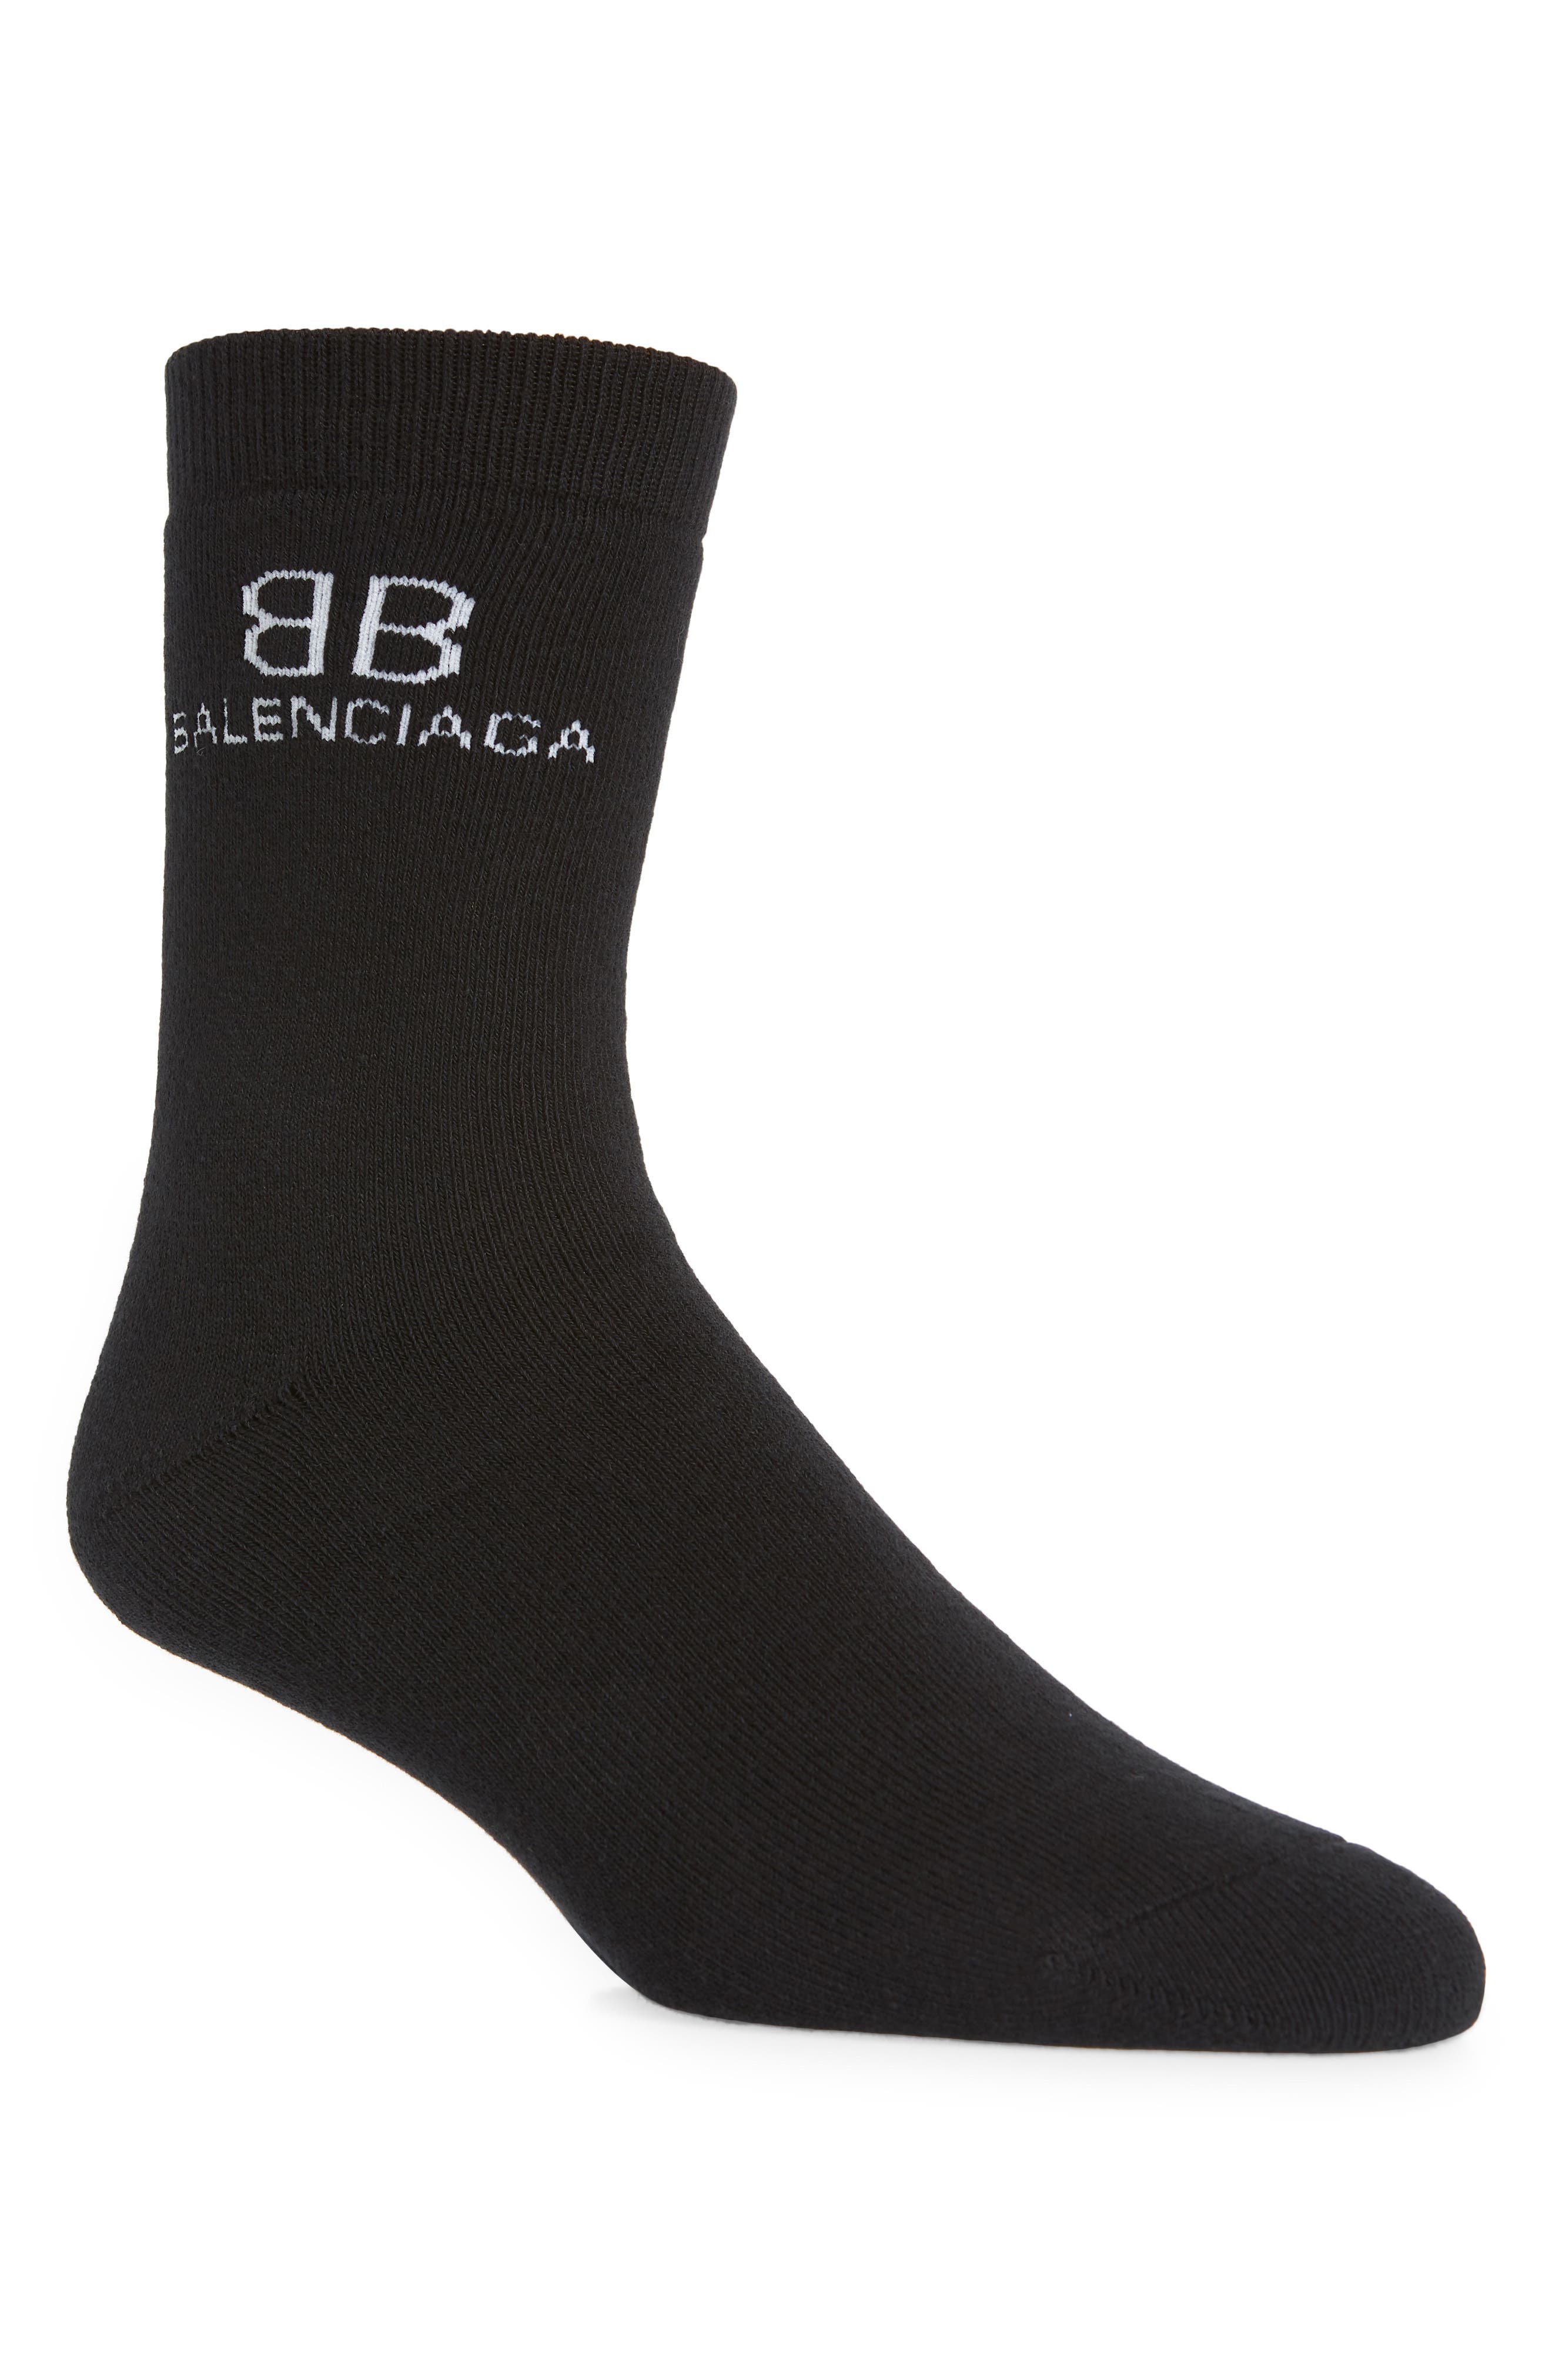 balenciaga that look like socks